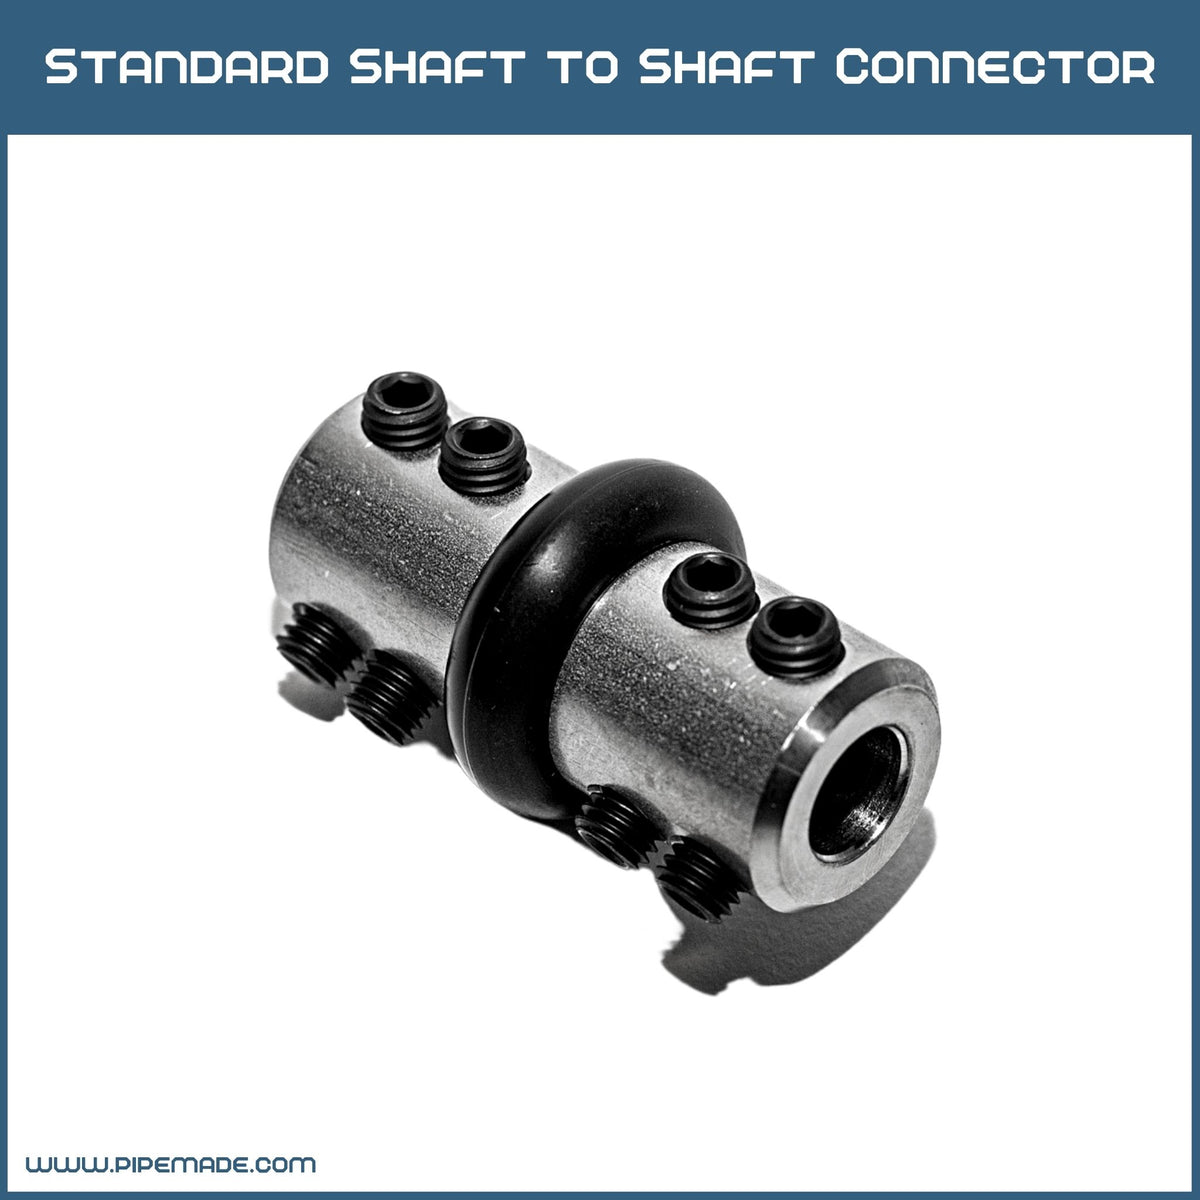 Standard Shaft to Shaft Connector